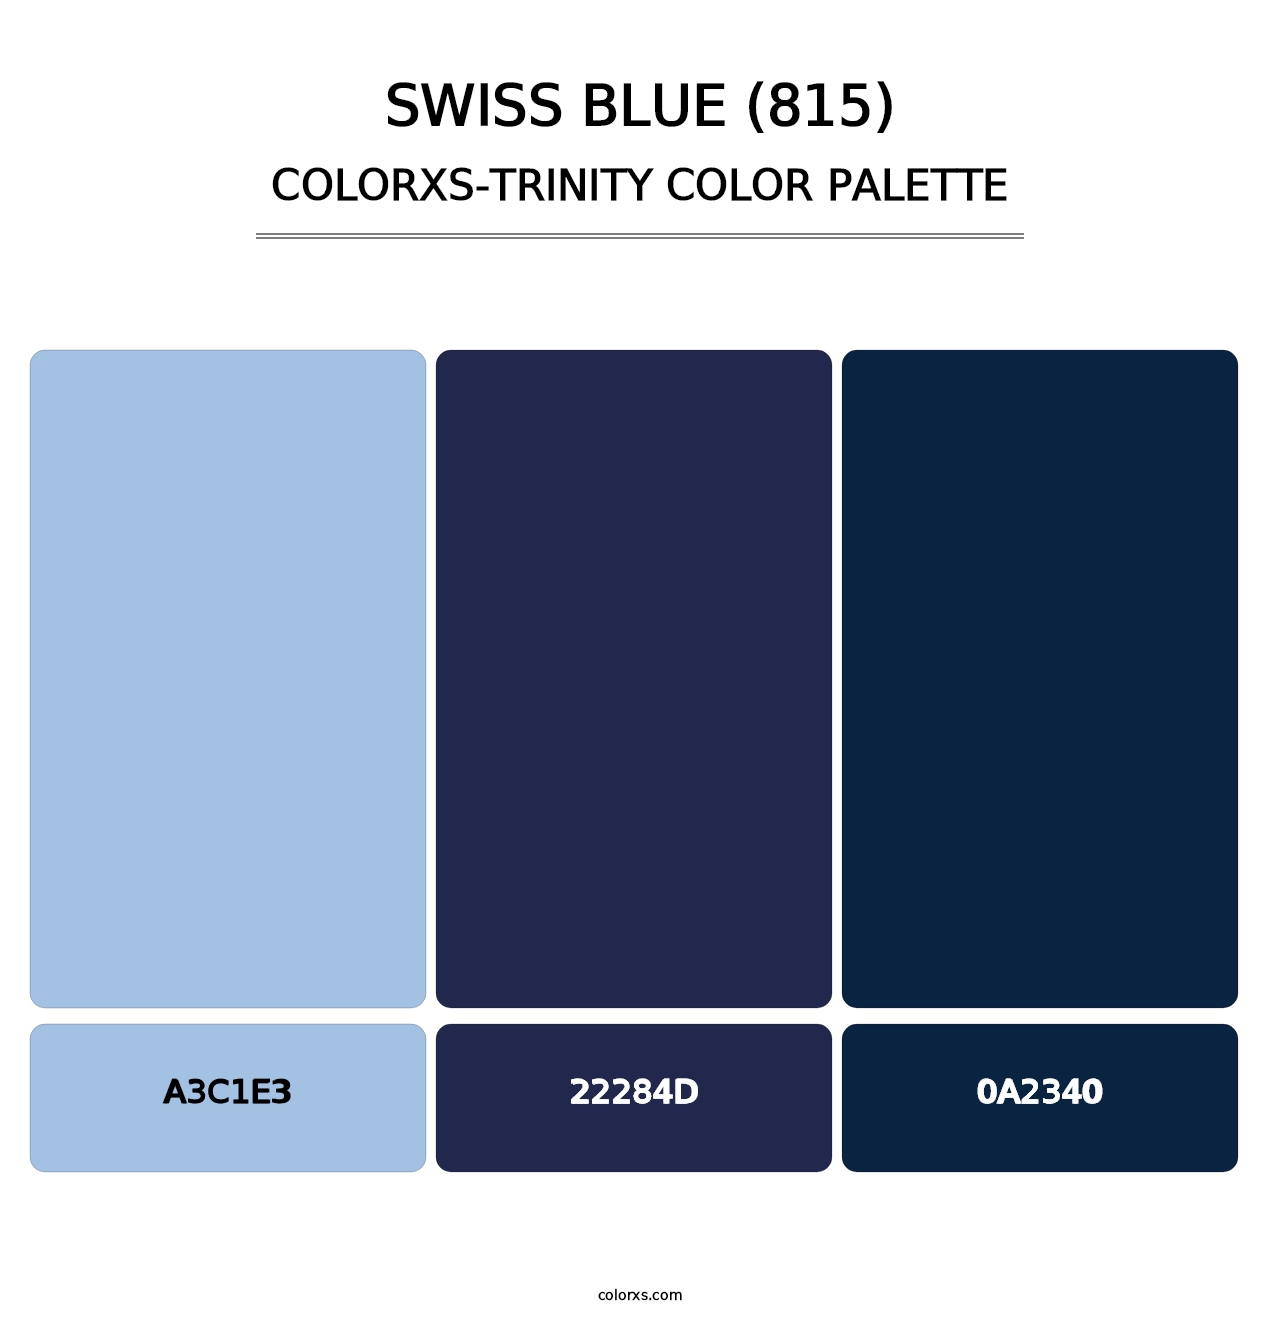 Swiss Blue (815) - Colorxs Trinity Palette